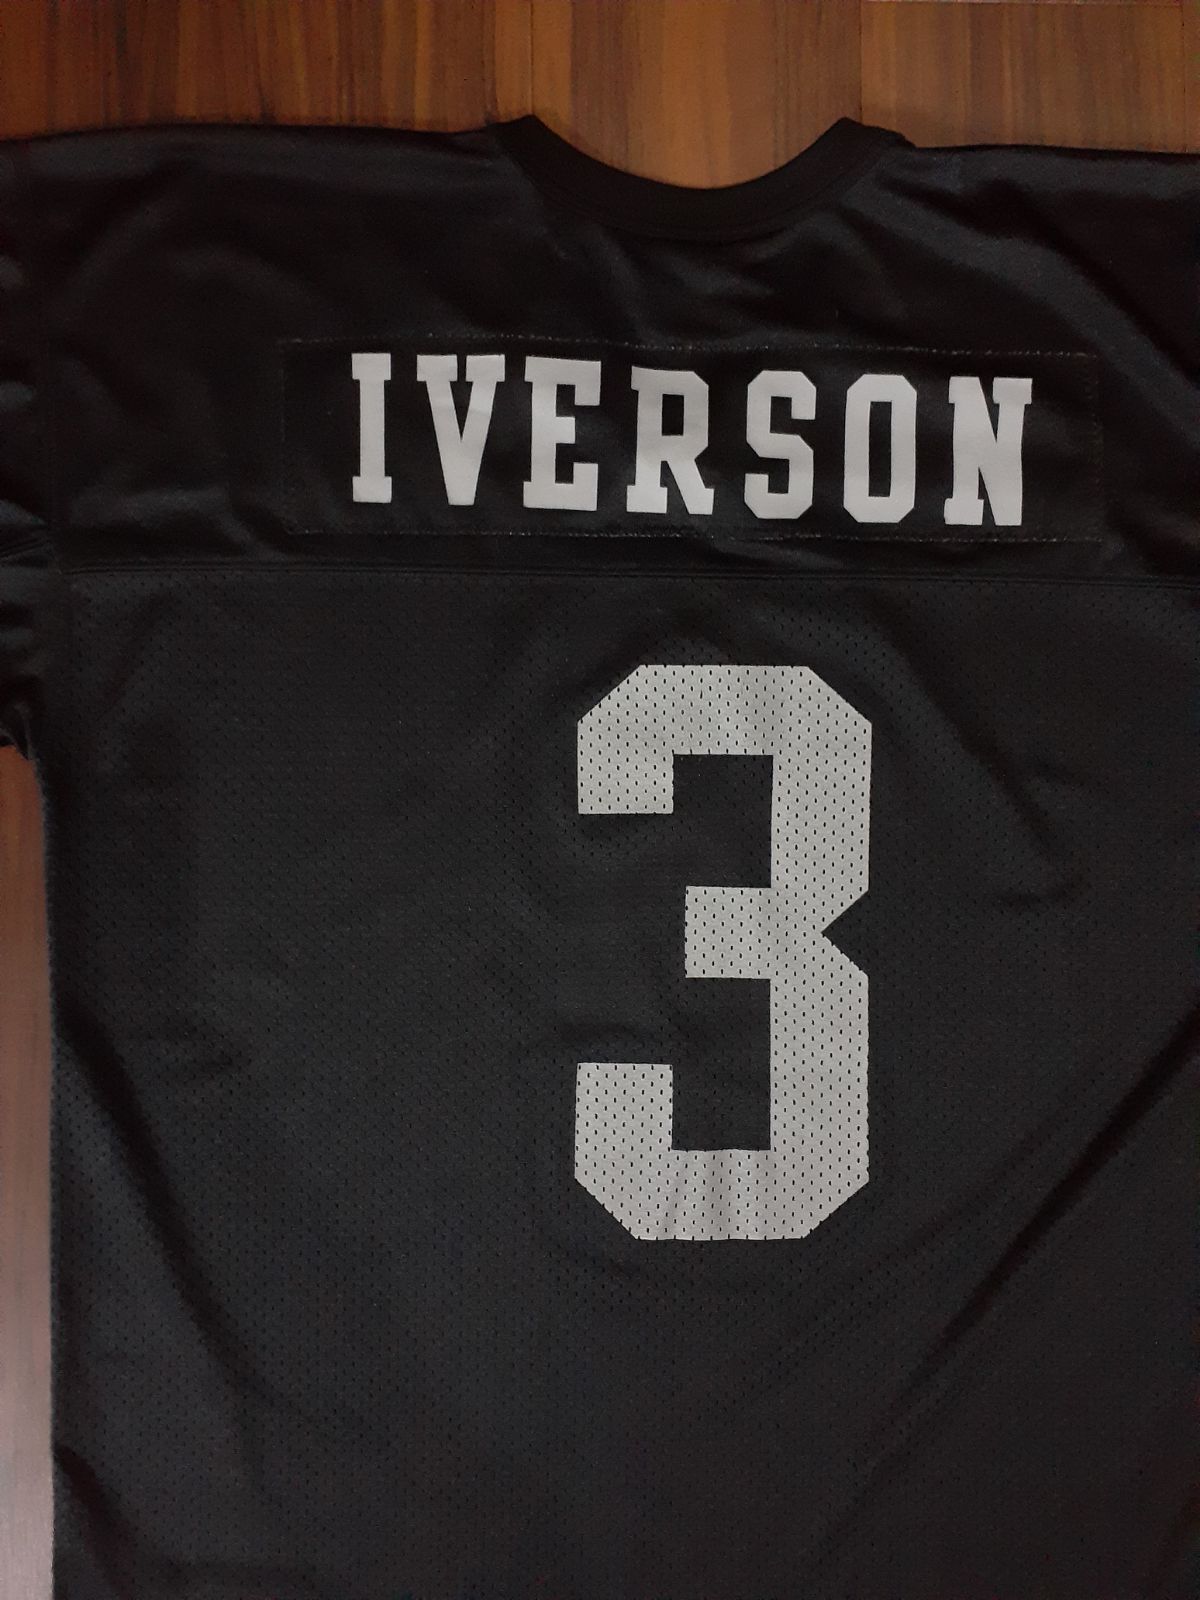 Reebok リーボック アイバーソン IVERSON ホッケーシャツ フットボールシャツ 黒